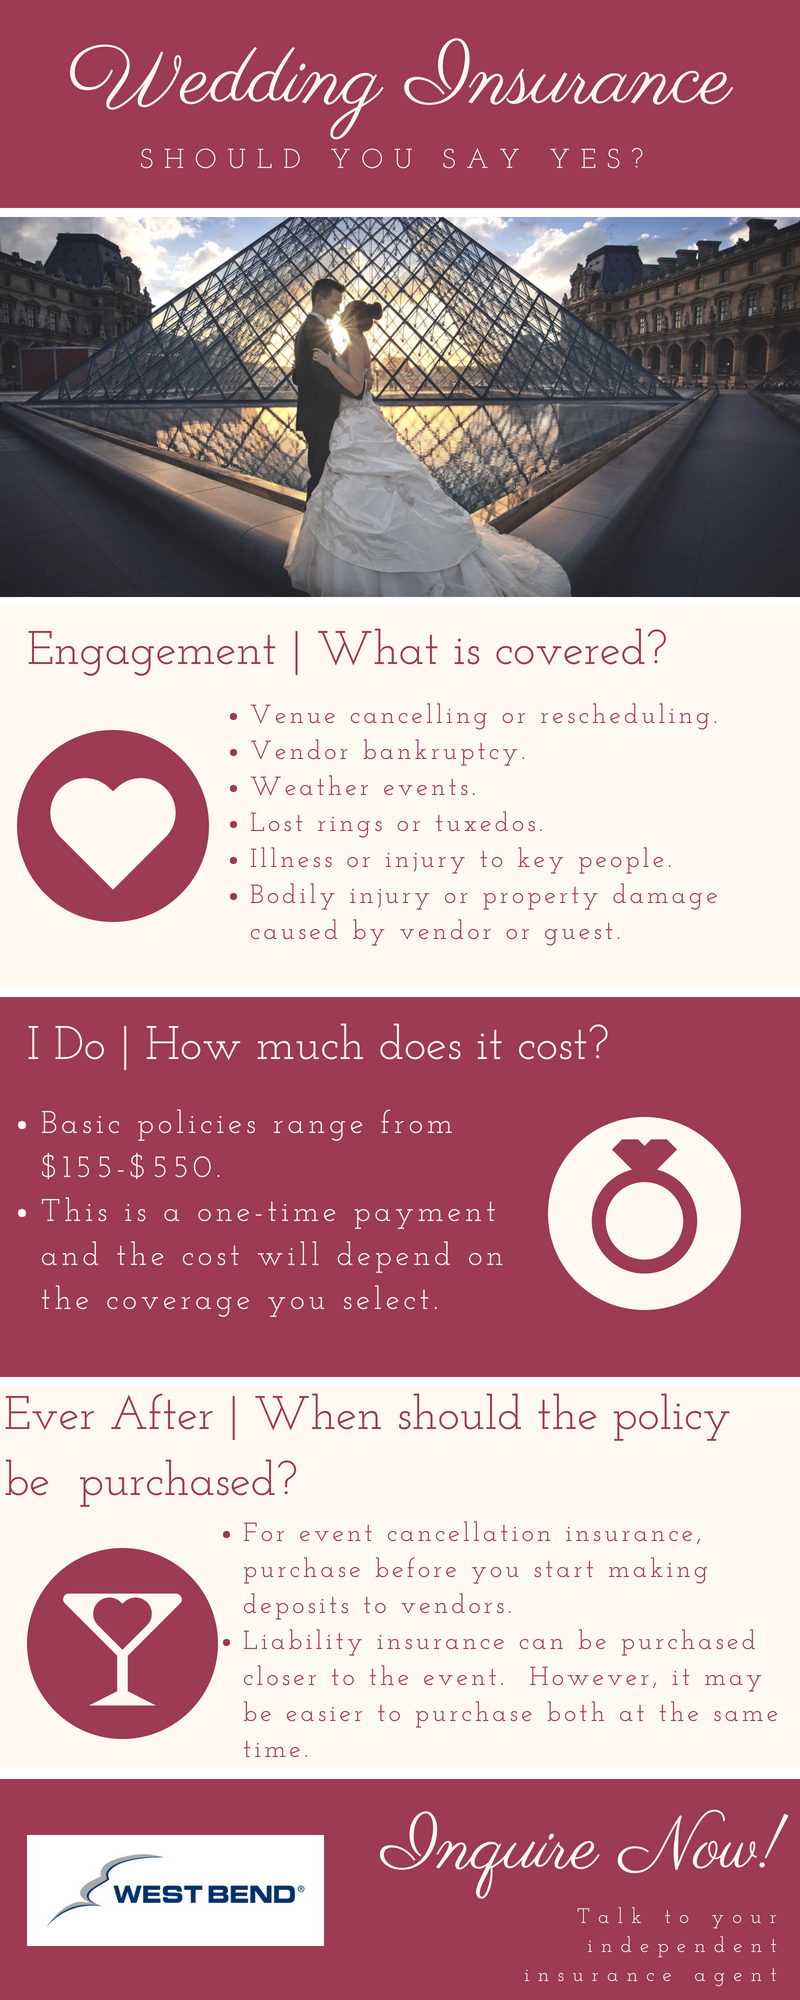 Wedding Insurance